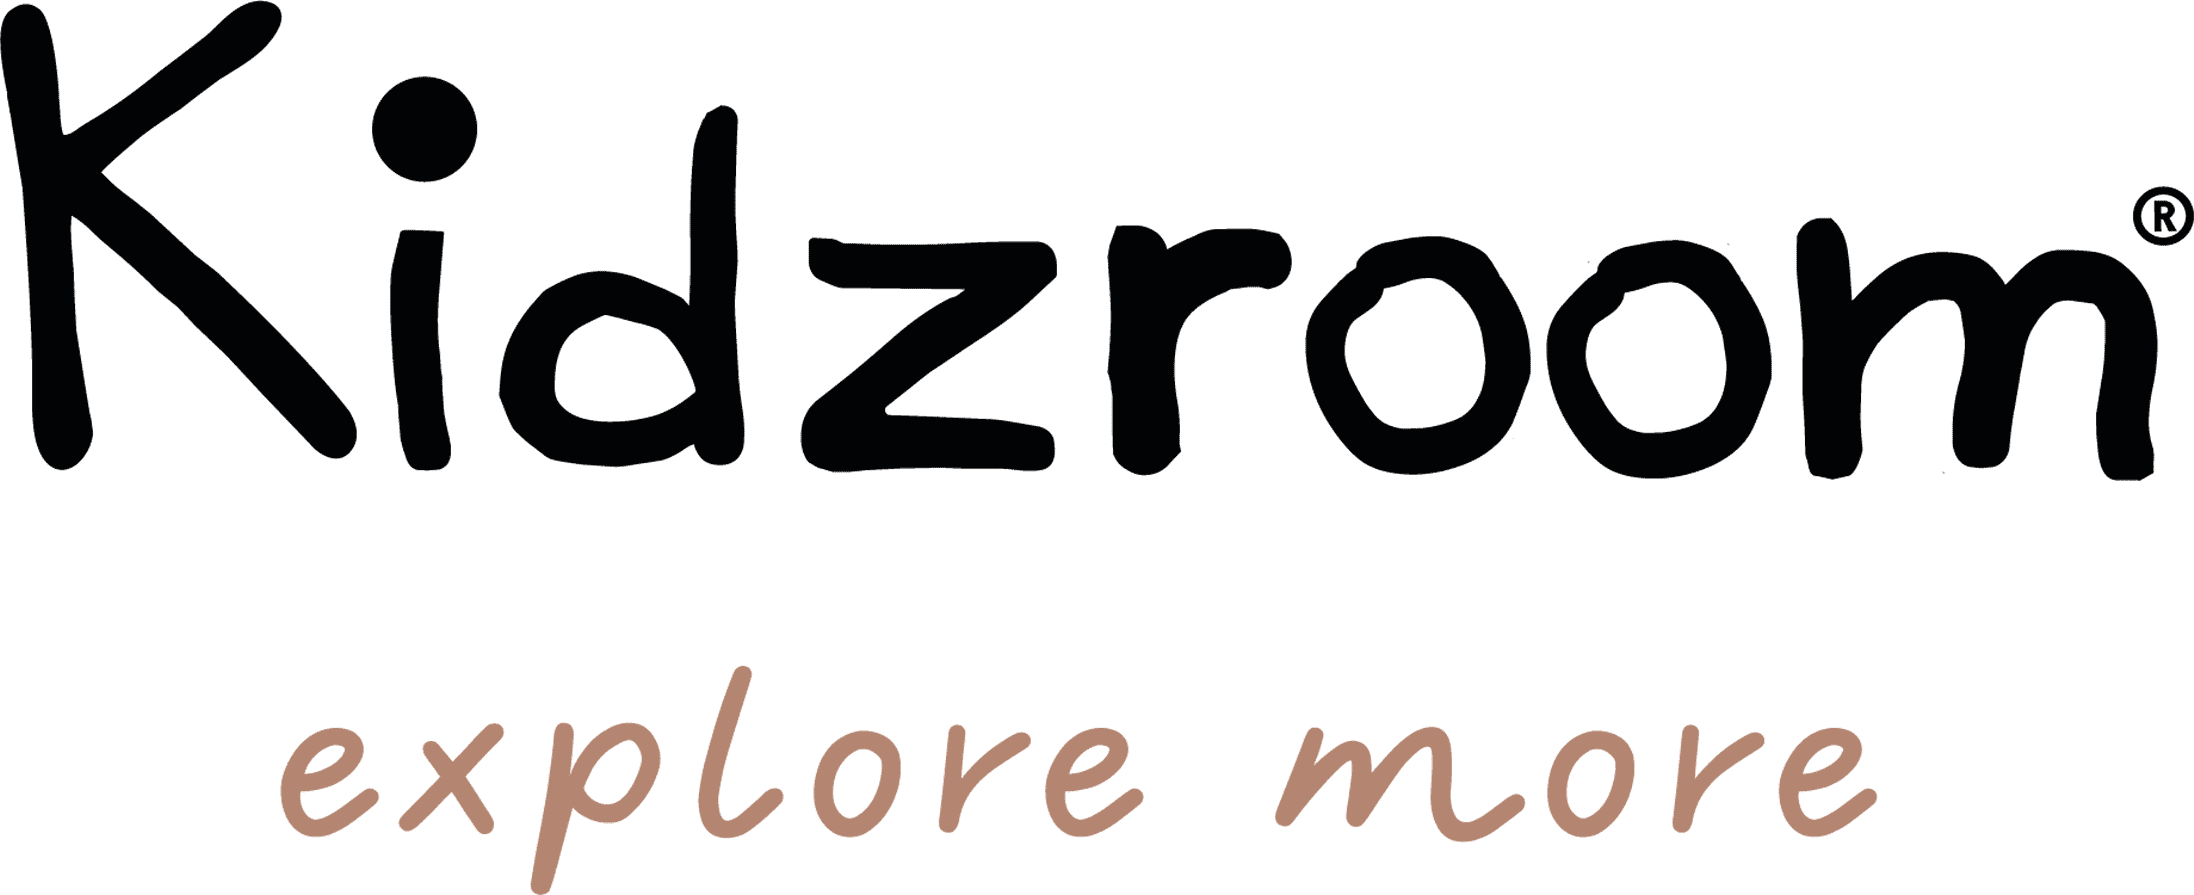 Logotipo Kidzroom Kids & Lifestyle